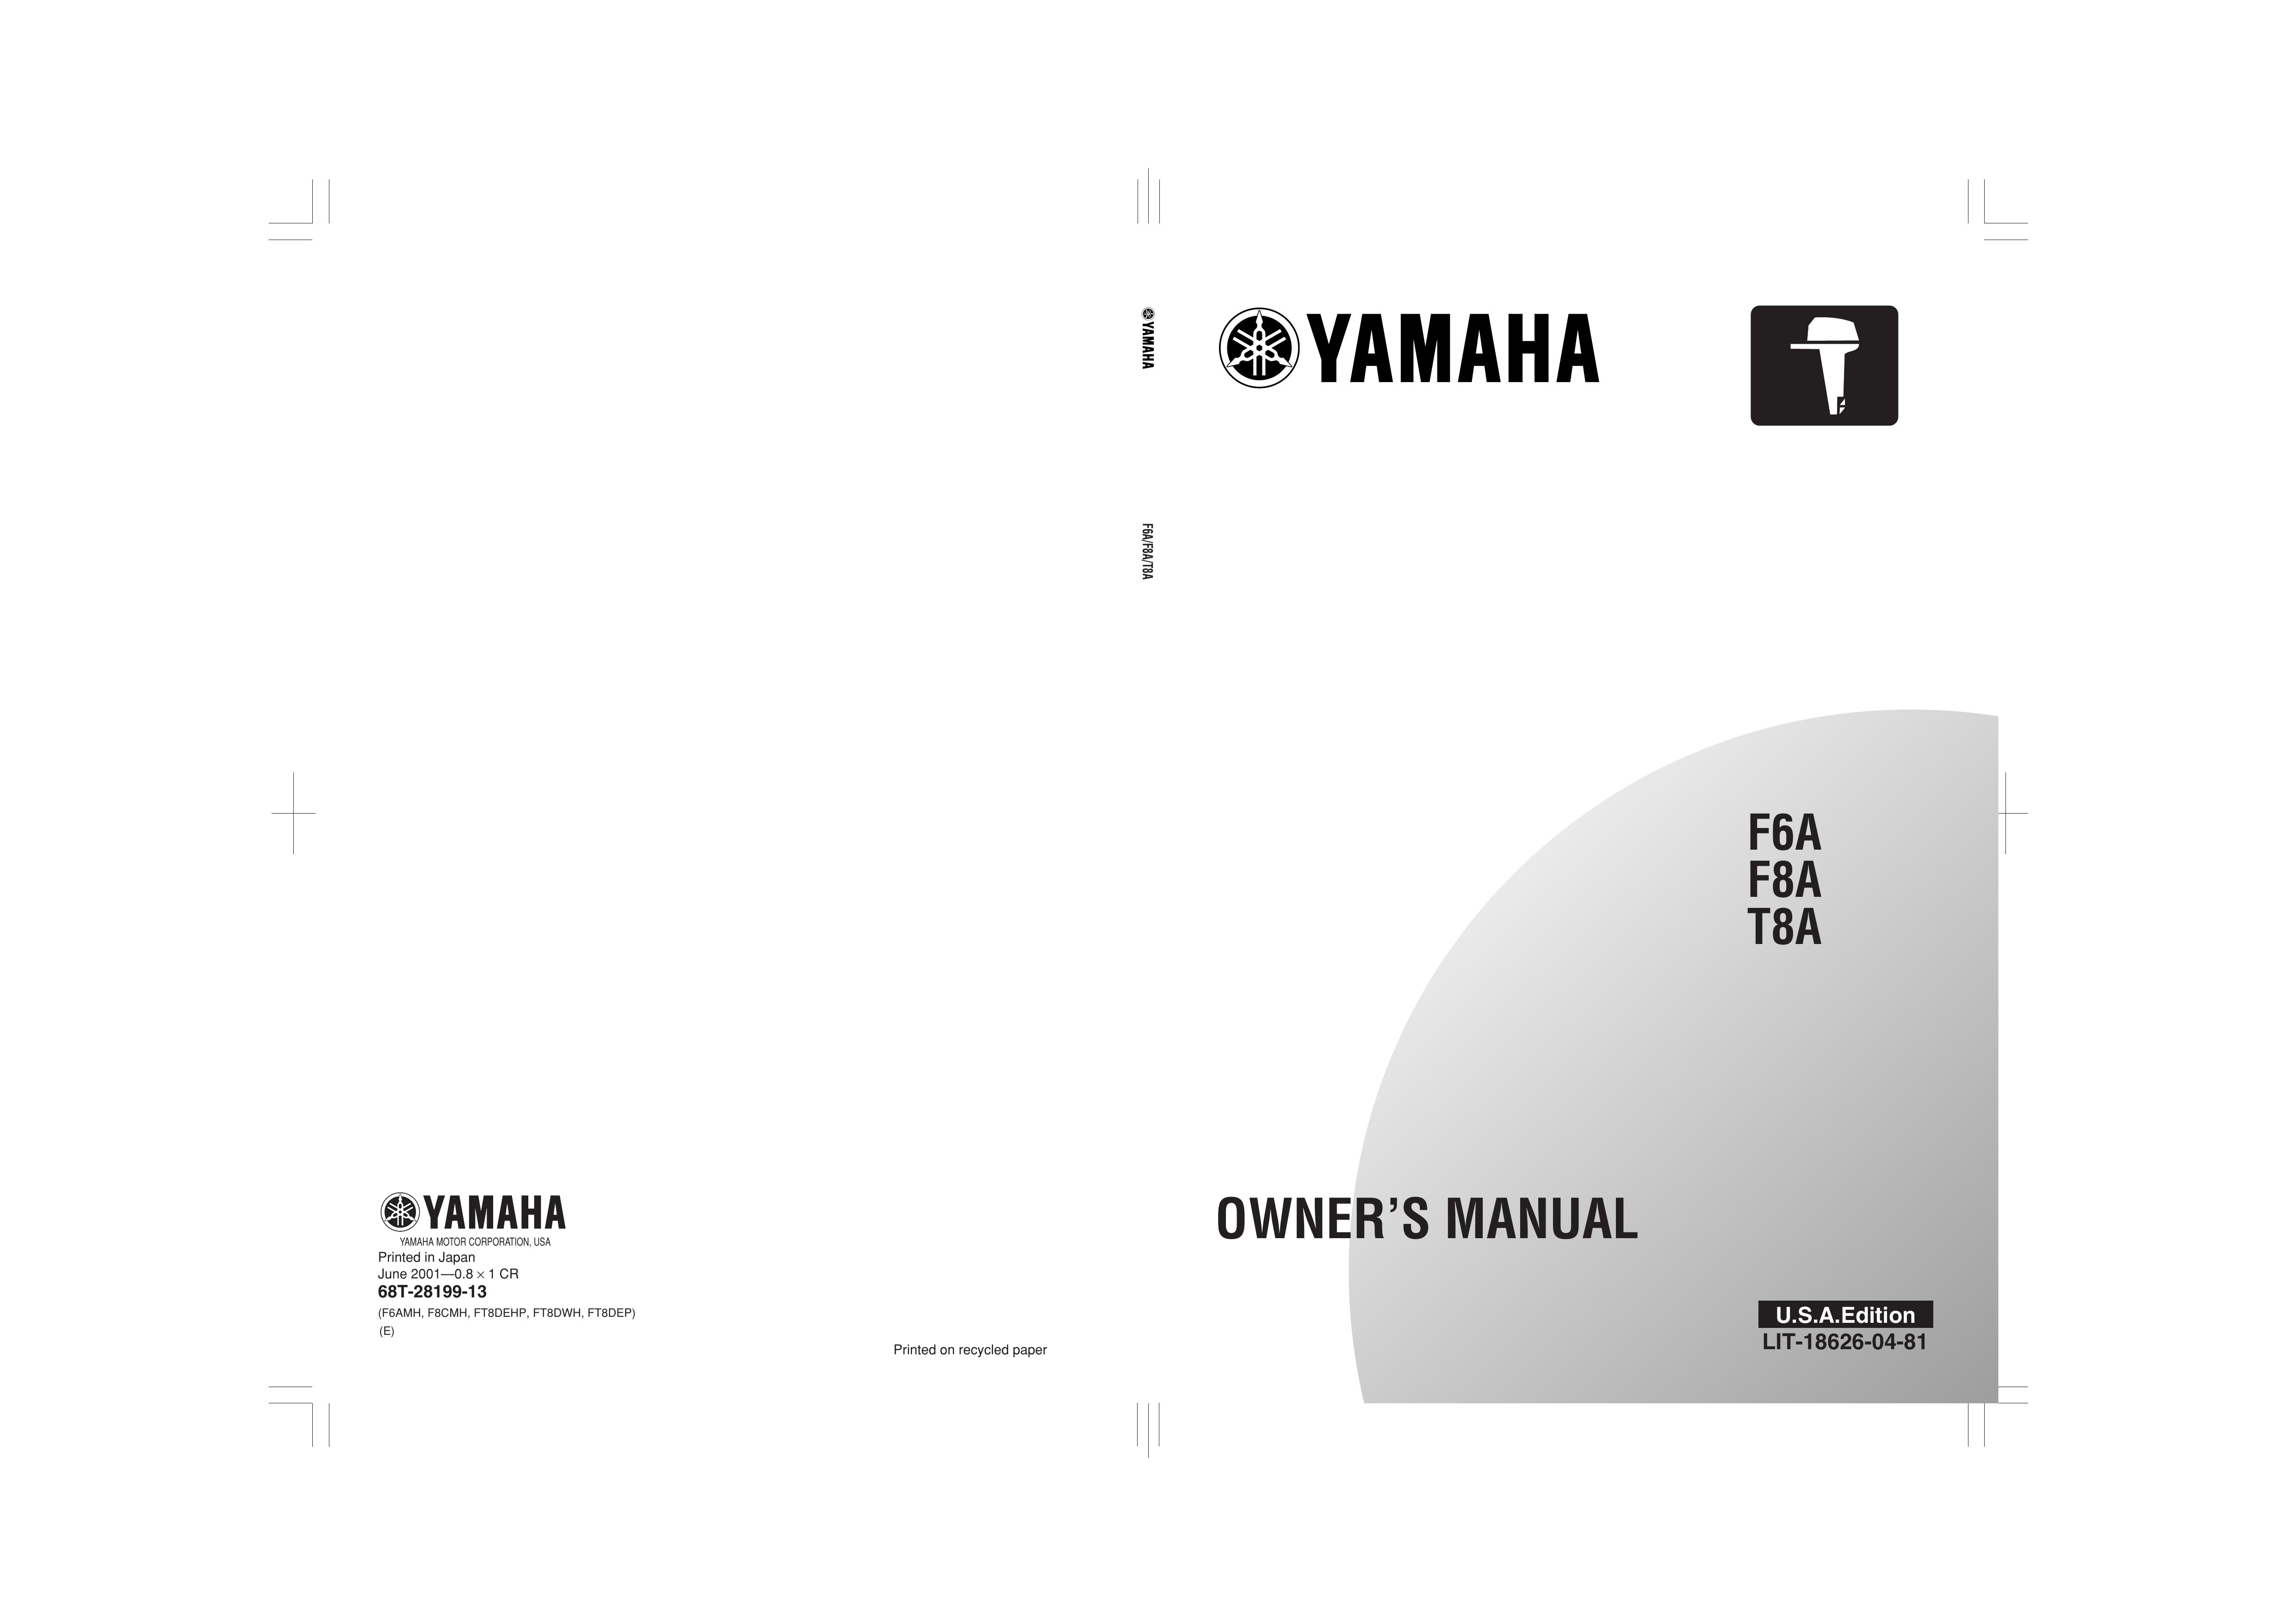 Yamaha F8A Outboard Motor User Manual